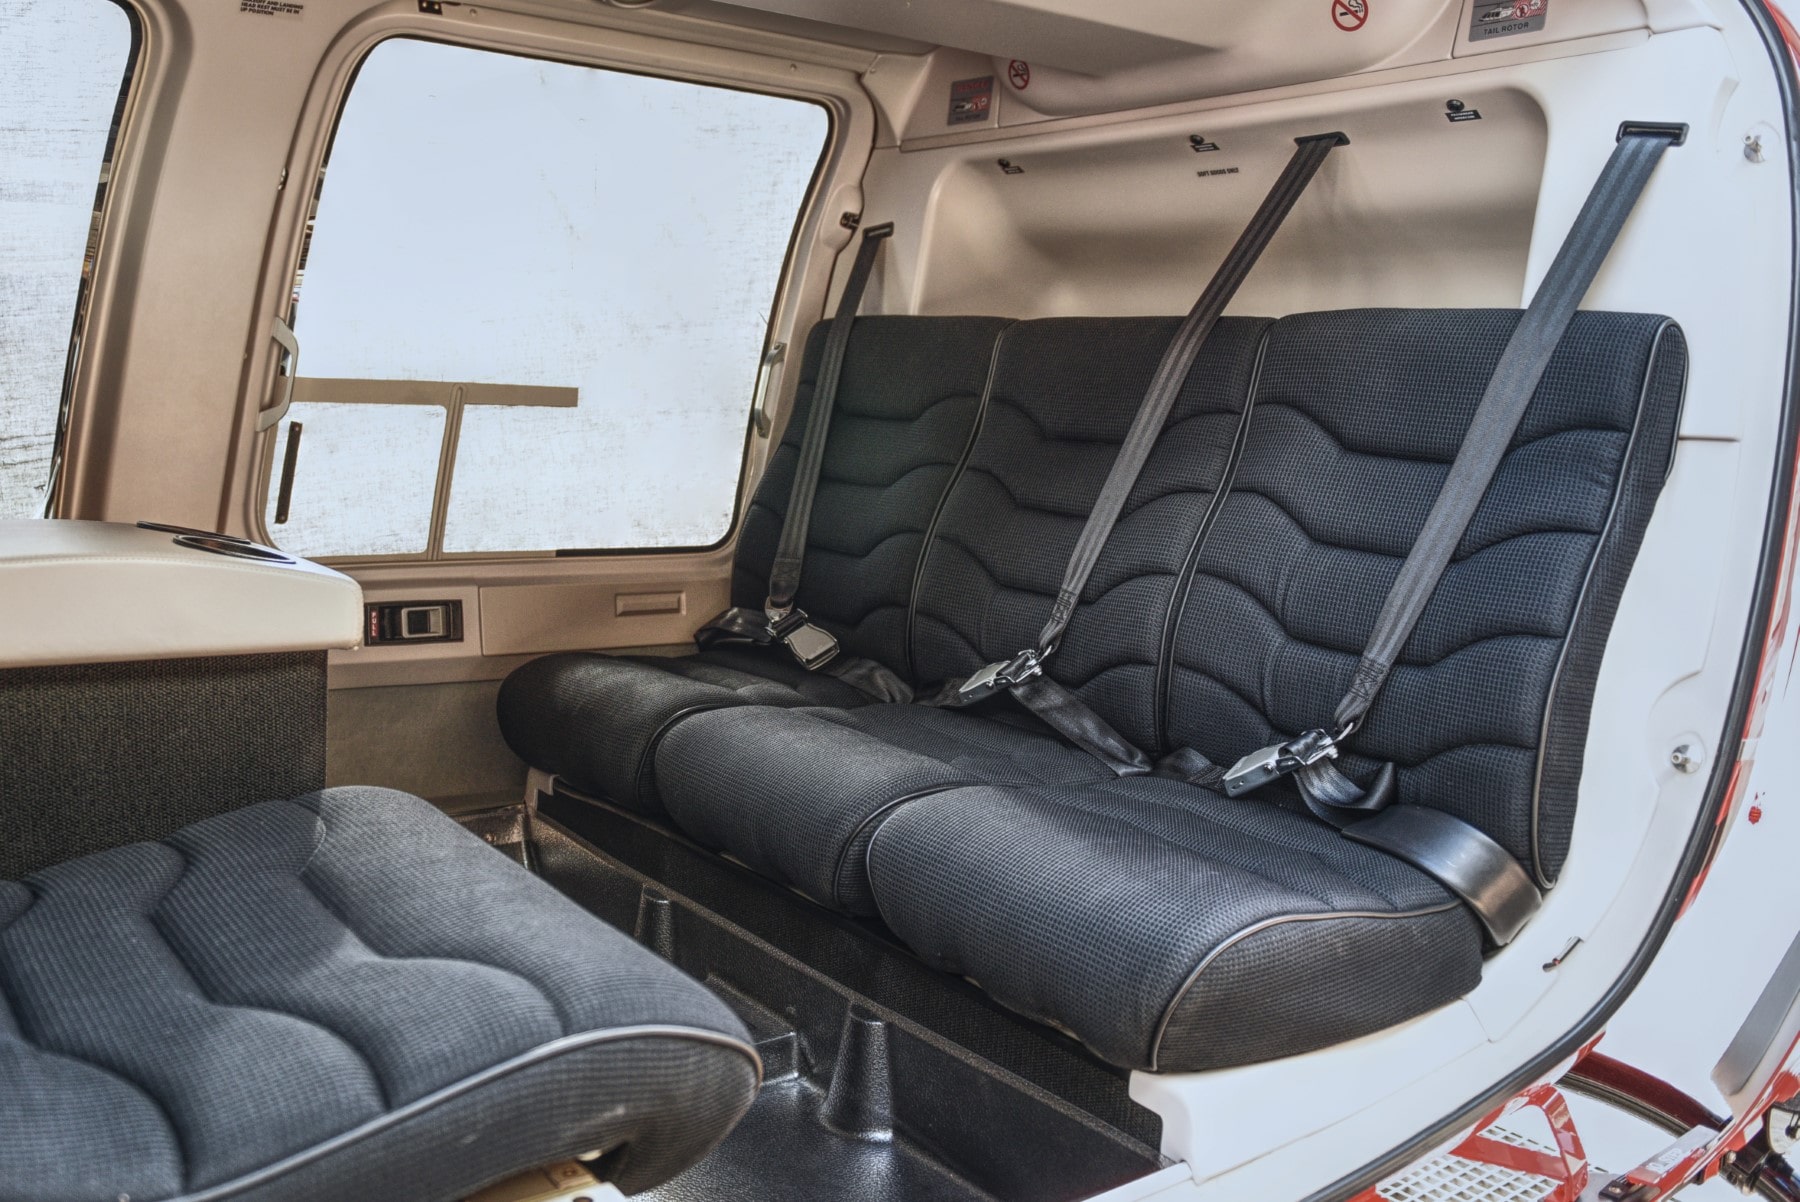 Bell 407 GXi, HB-ZWL, HB-ZWM, Flotte Grenchen, Backseat View, LSZG